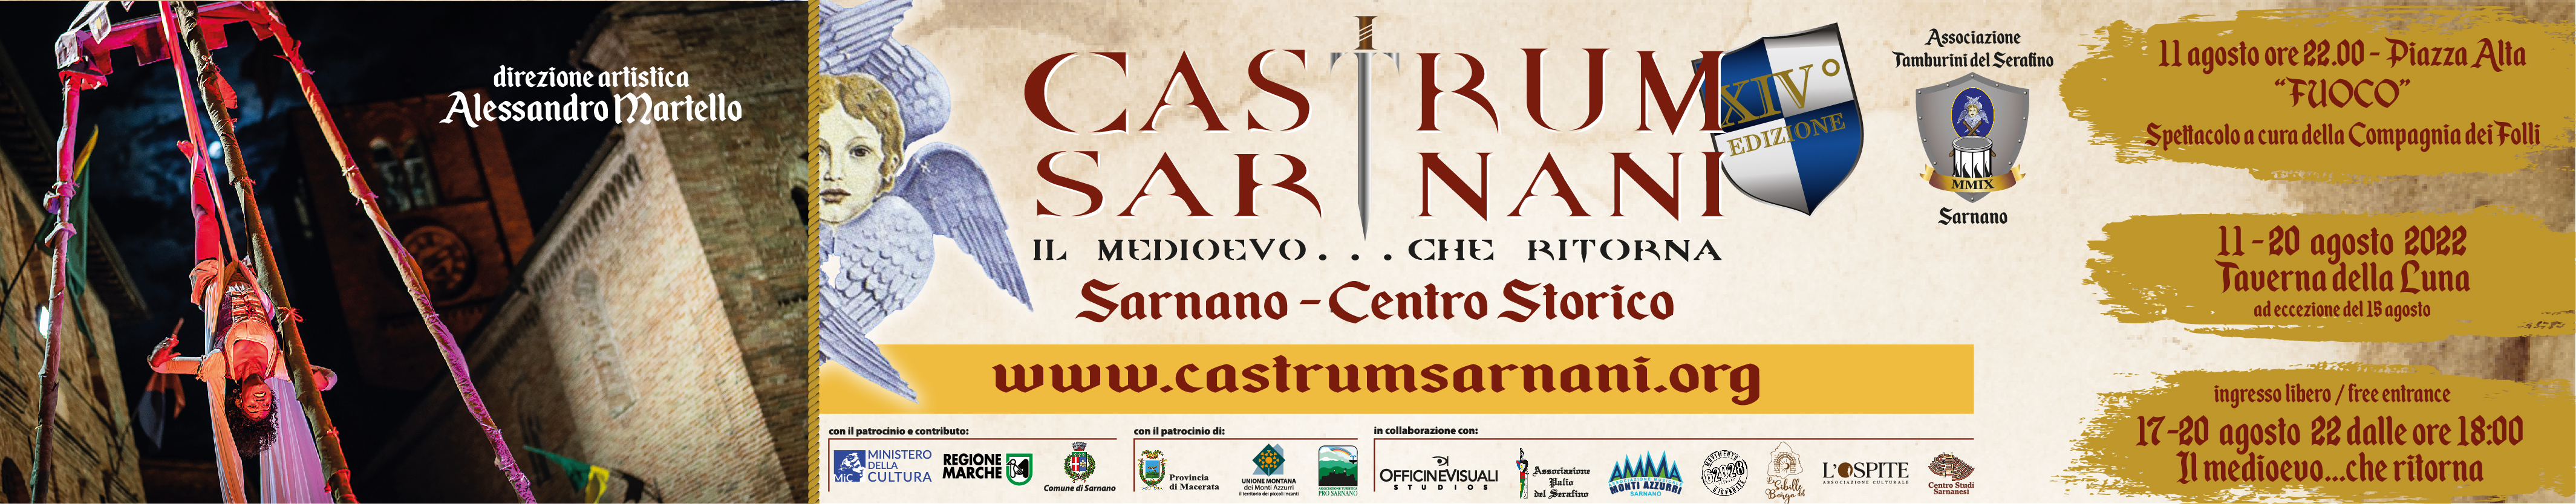 Banner-Castrum-Sarnani-1022x200